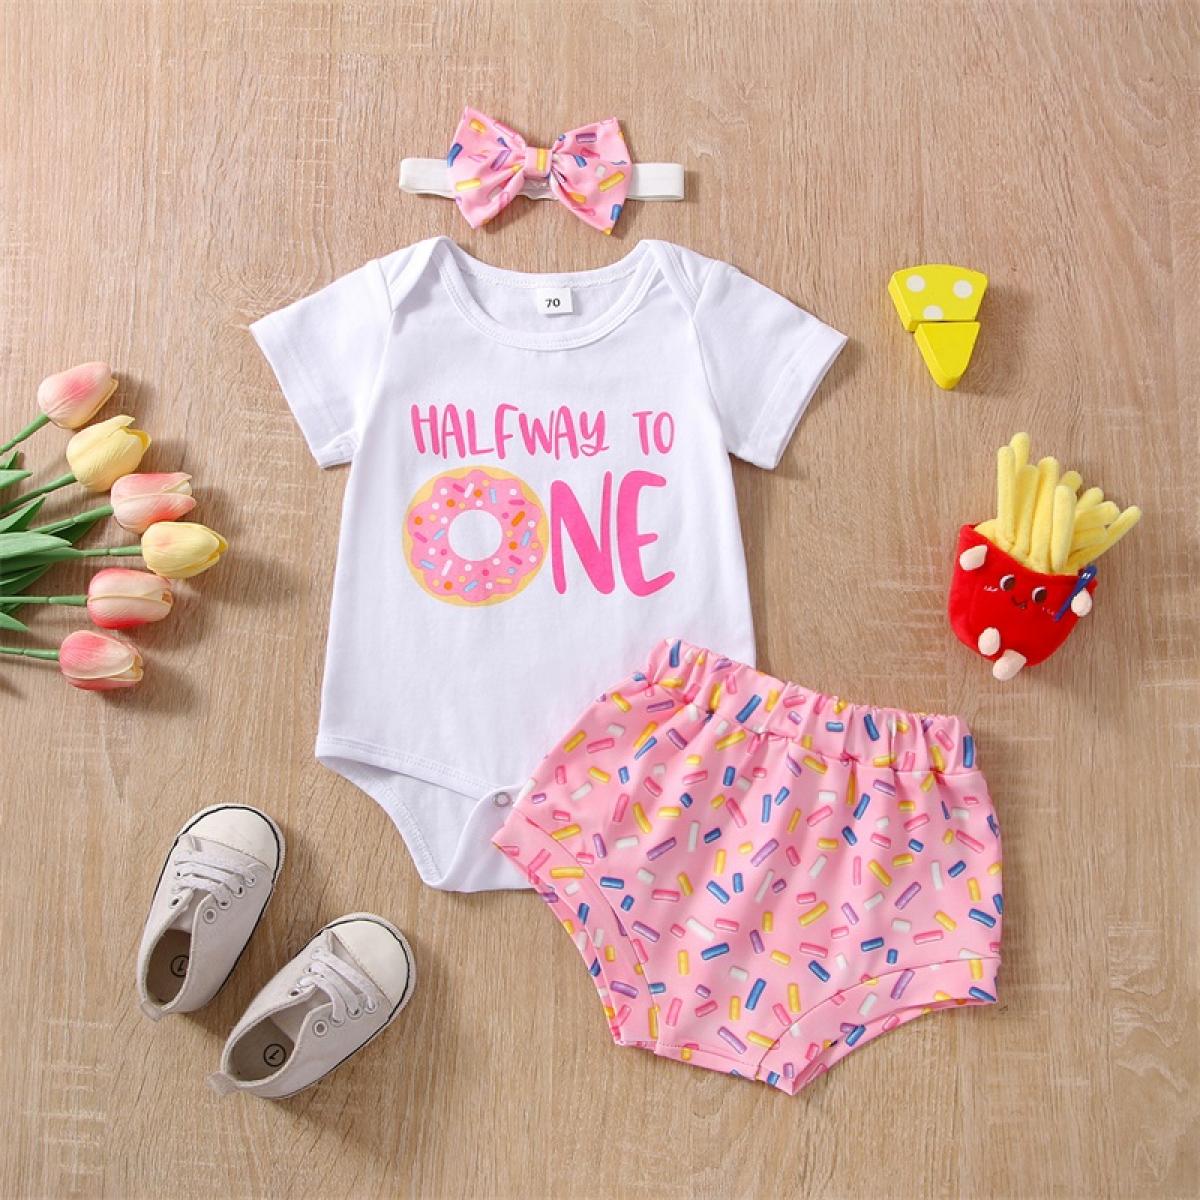 Sunsiom Baby Girls Birthday Outfit Summer Clothes Short Sleeve Doughnut  Romper + Shorts + Headband 3pcs Set Kid Size 6M